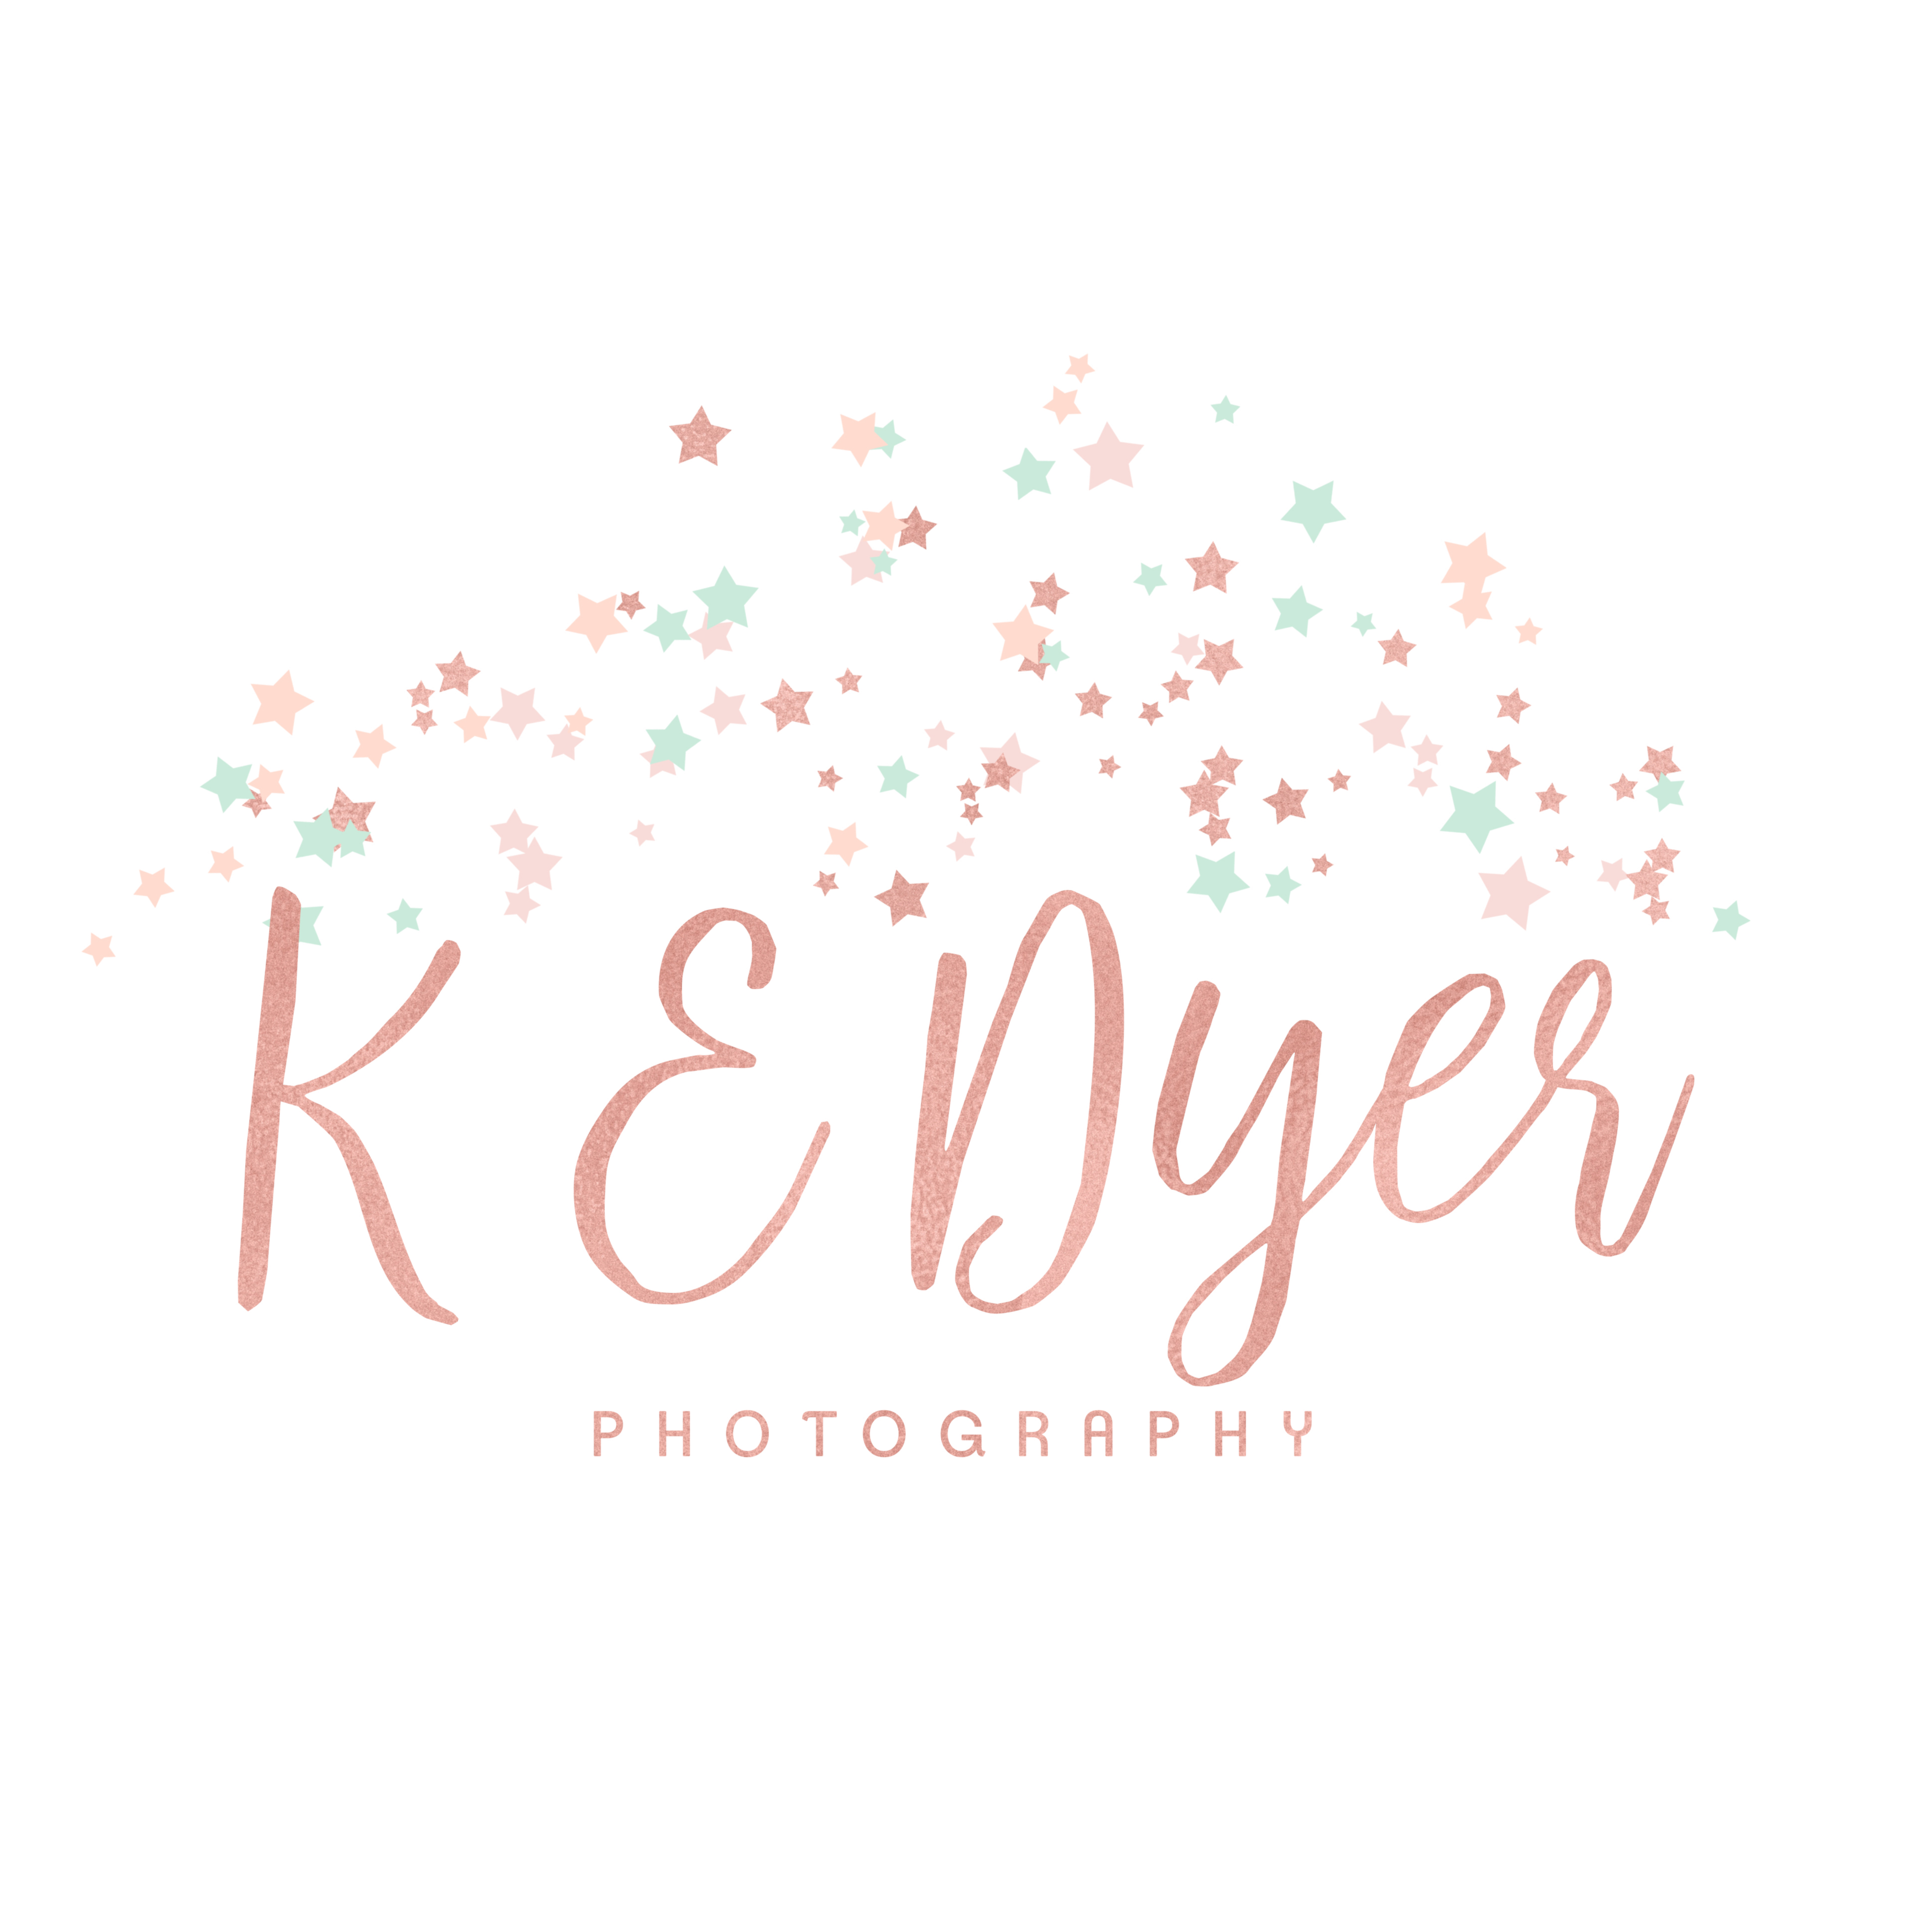 K E Dyer Photography